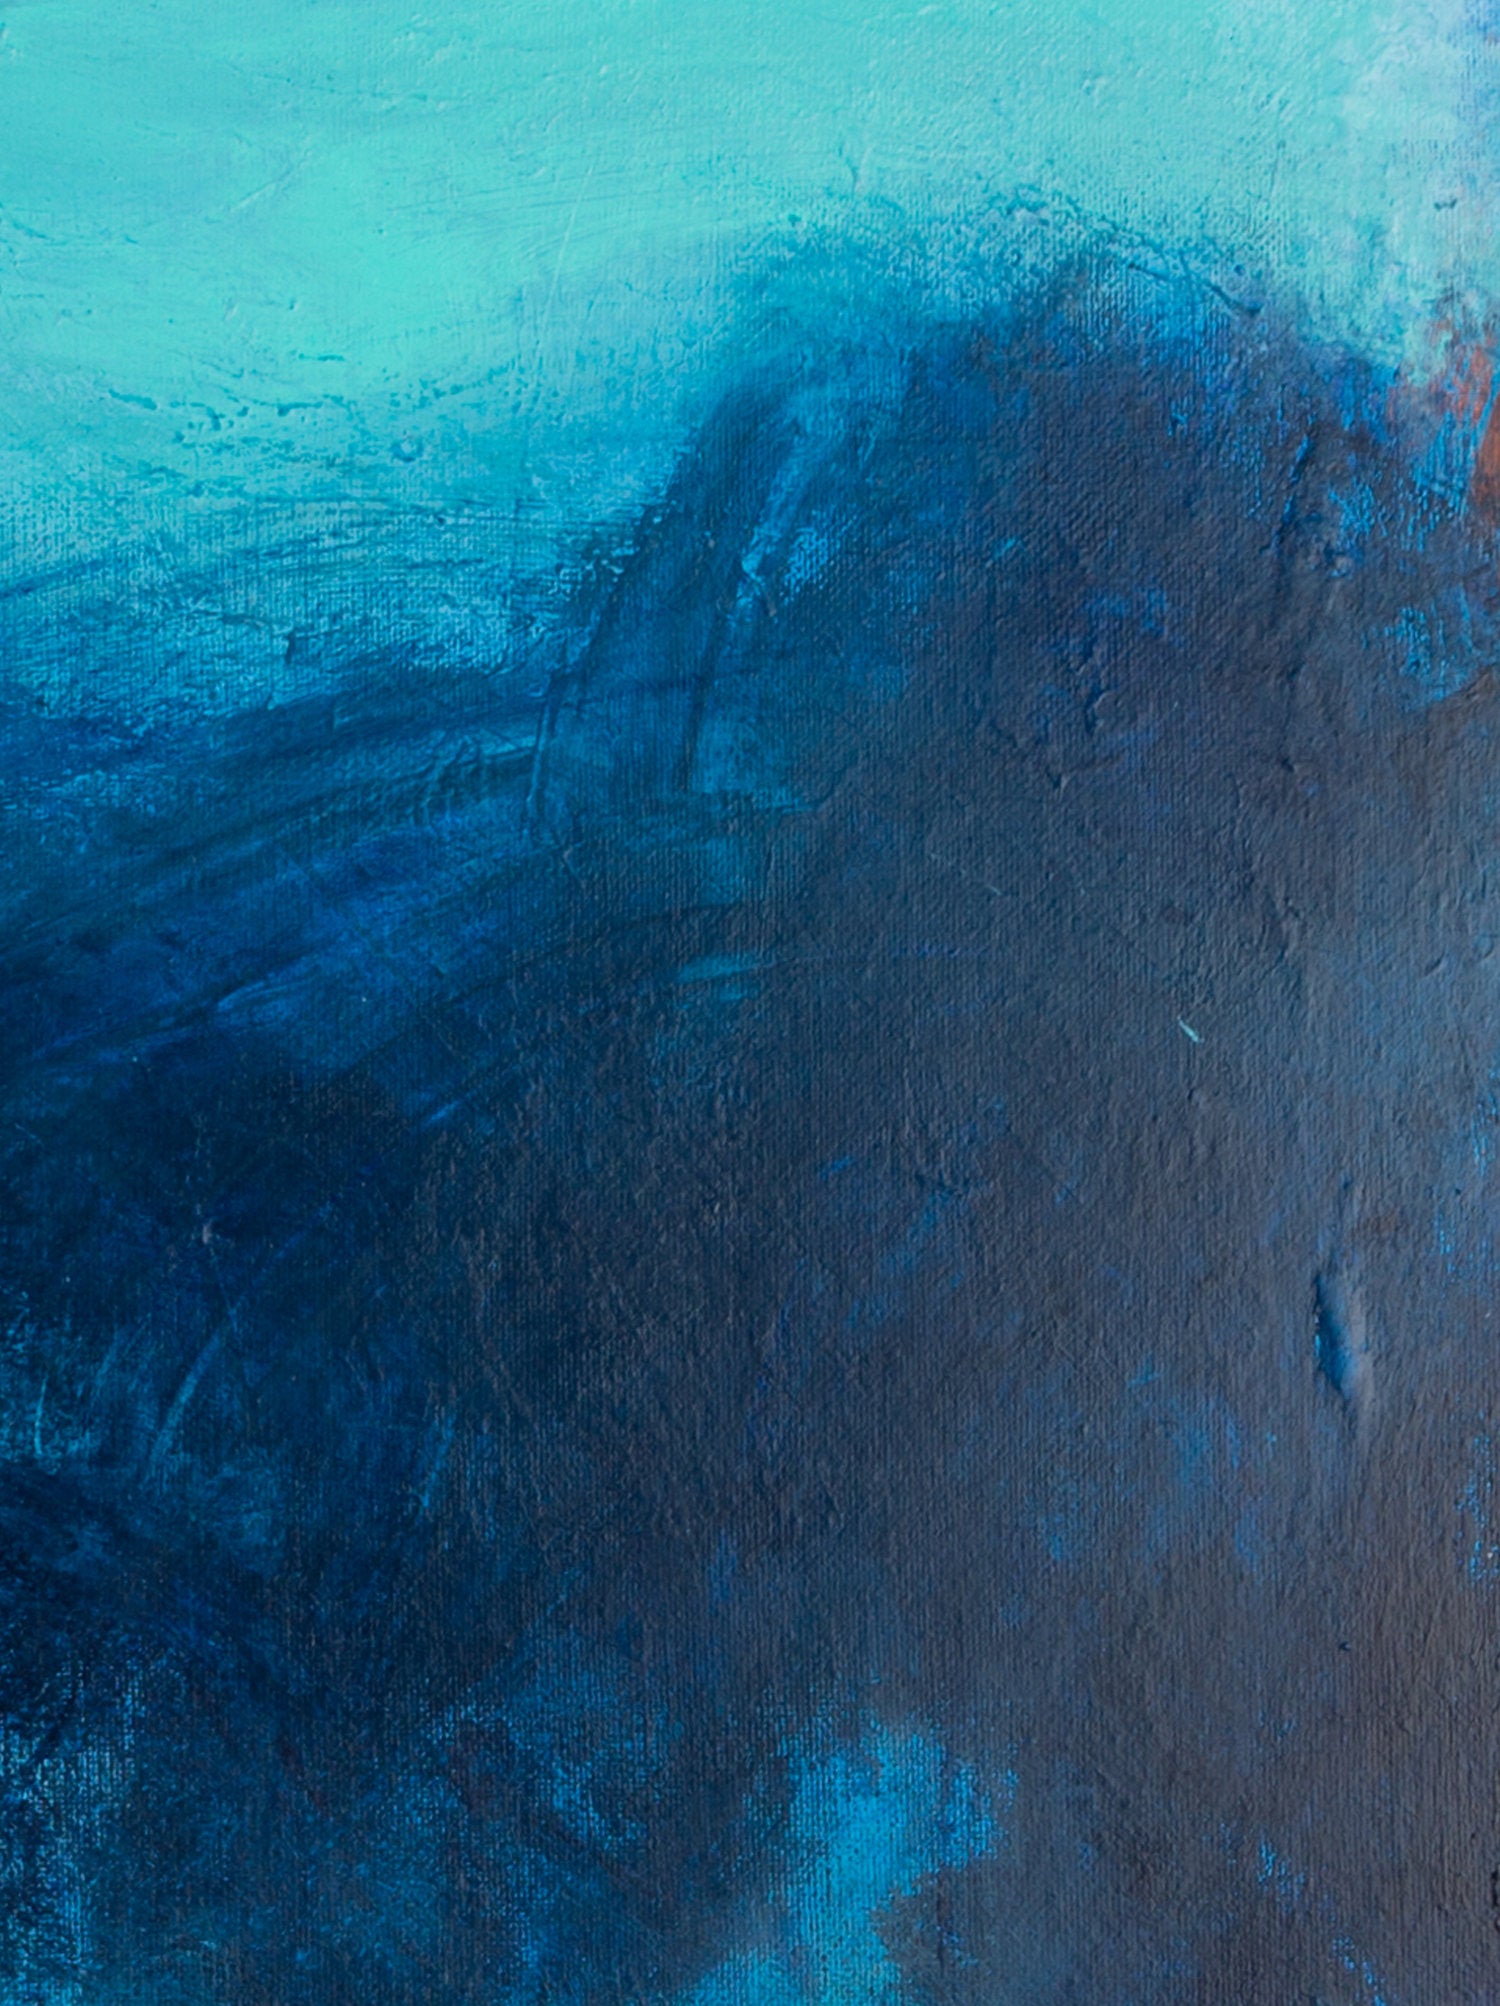 Blue ocean wall art decor, Canvas art abstract painting, Canvas painting, Colorful Abstract Art Acrylic painting by Camilo Mattis - camilomattis.com